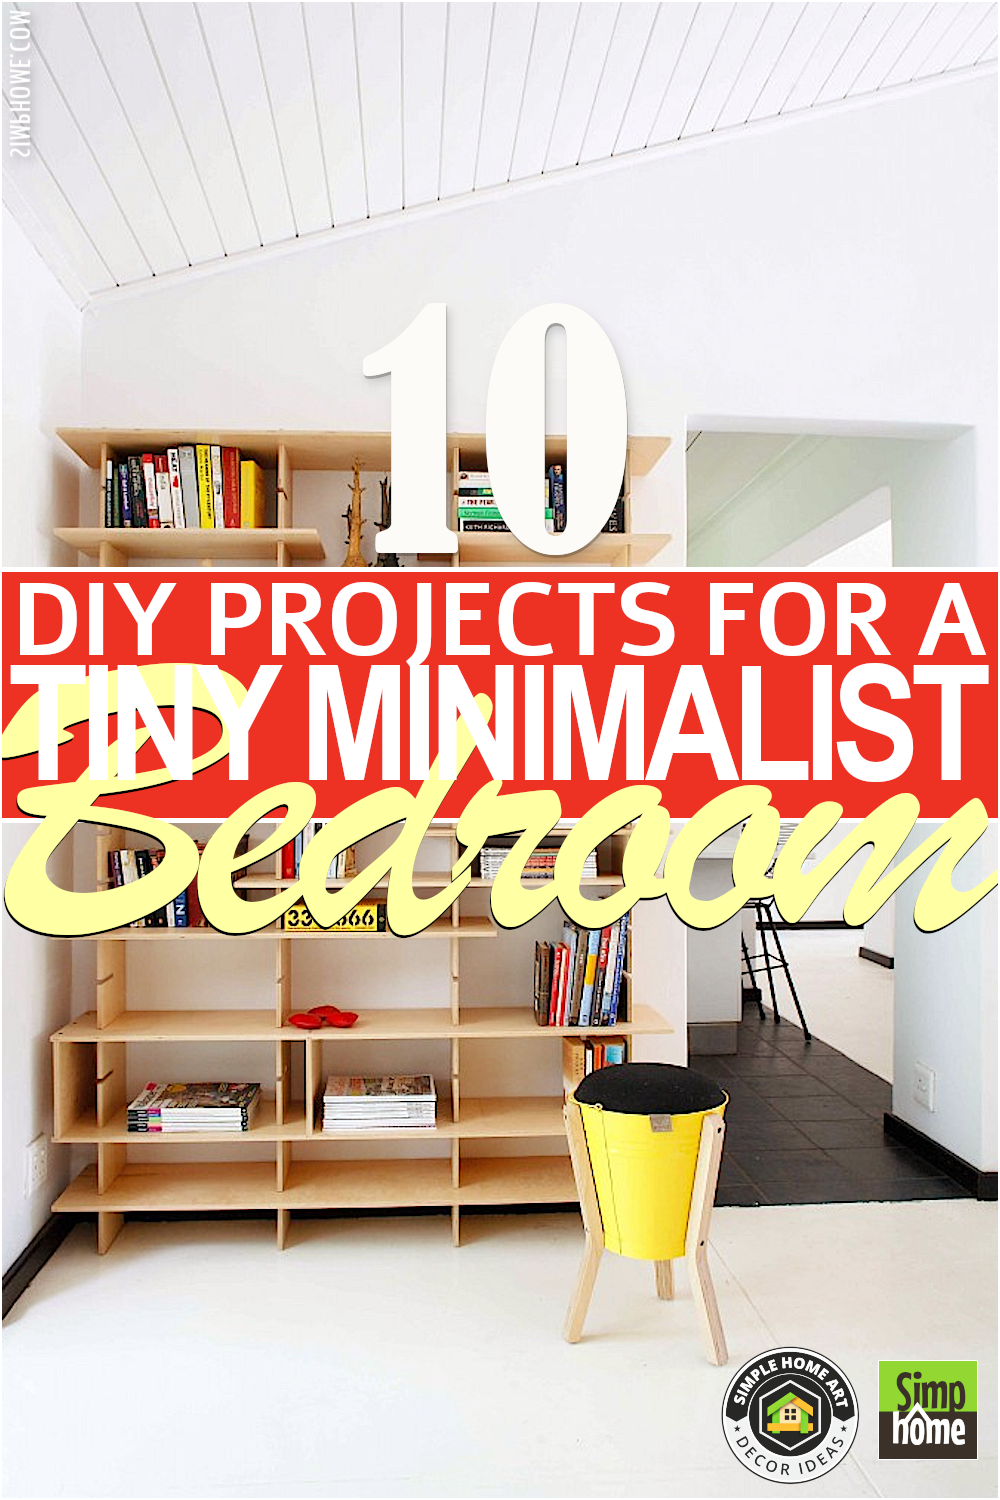 Tiny bedroom design minimalist project ideas